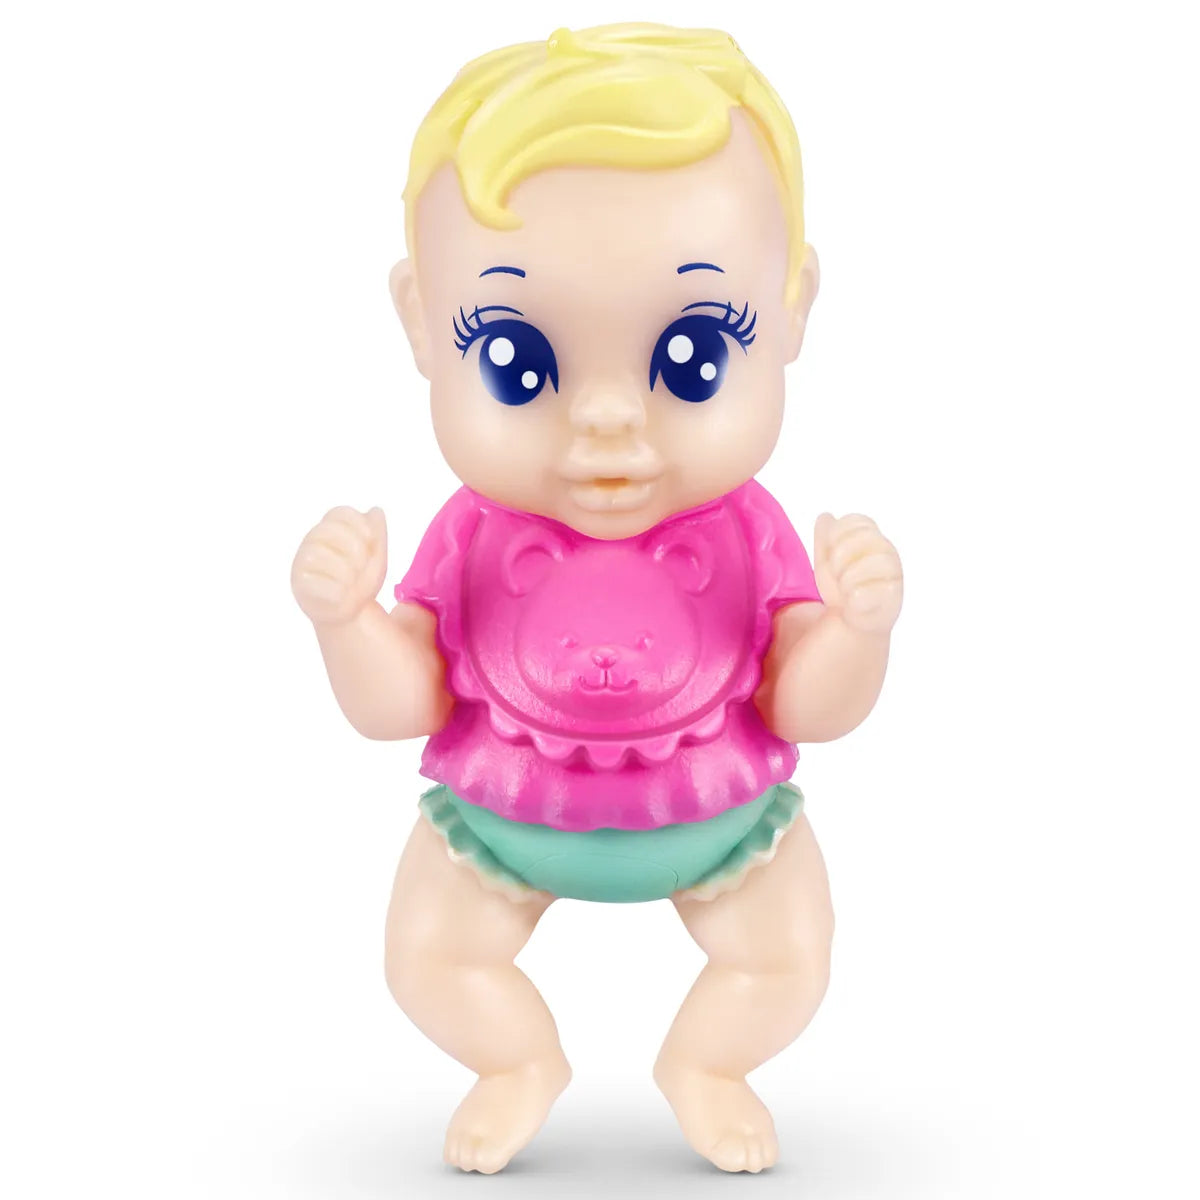 Glitzeez Babysitter Doll Playset